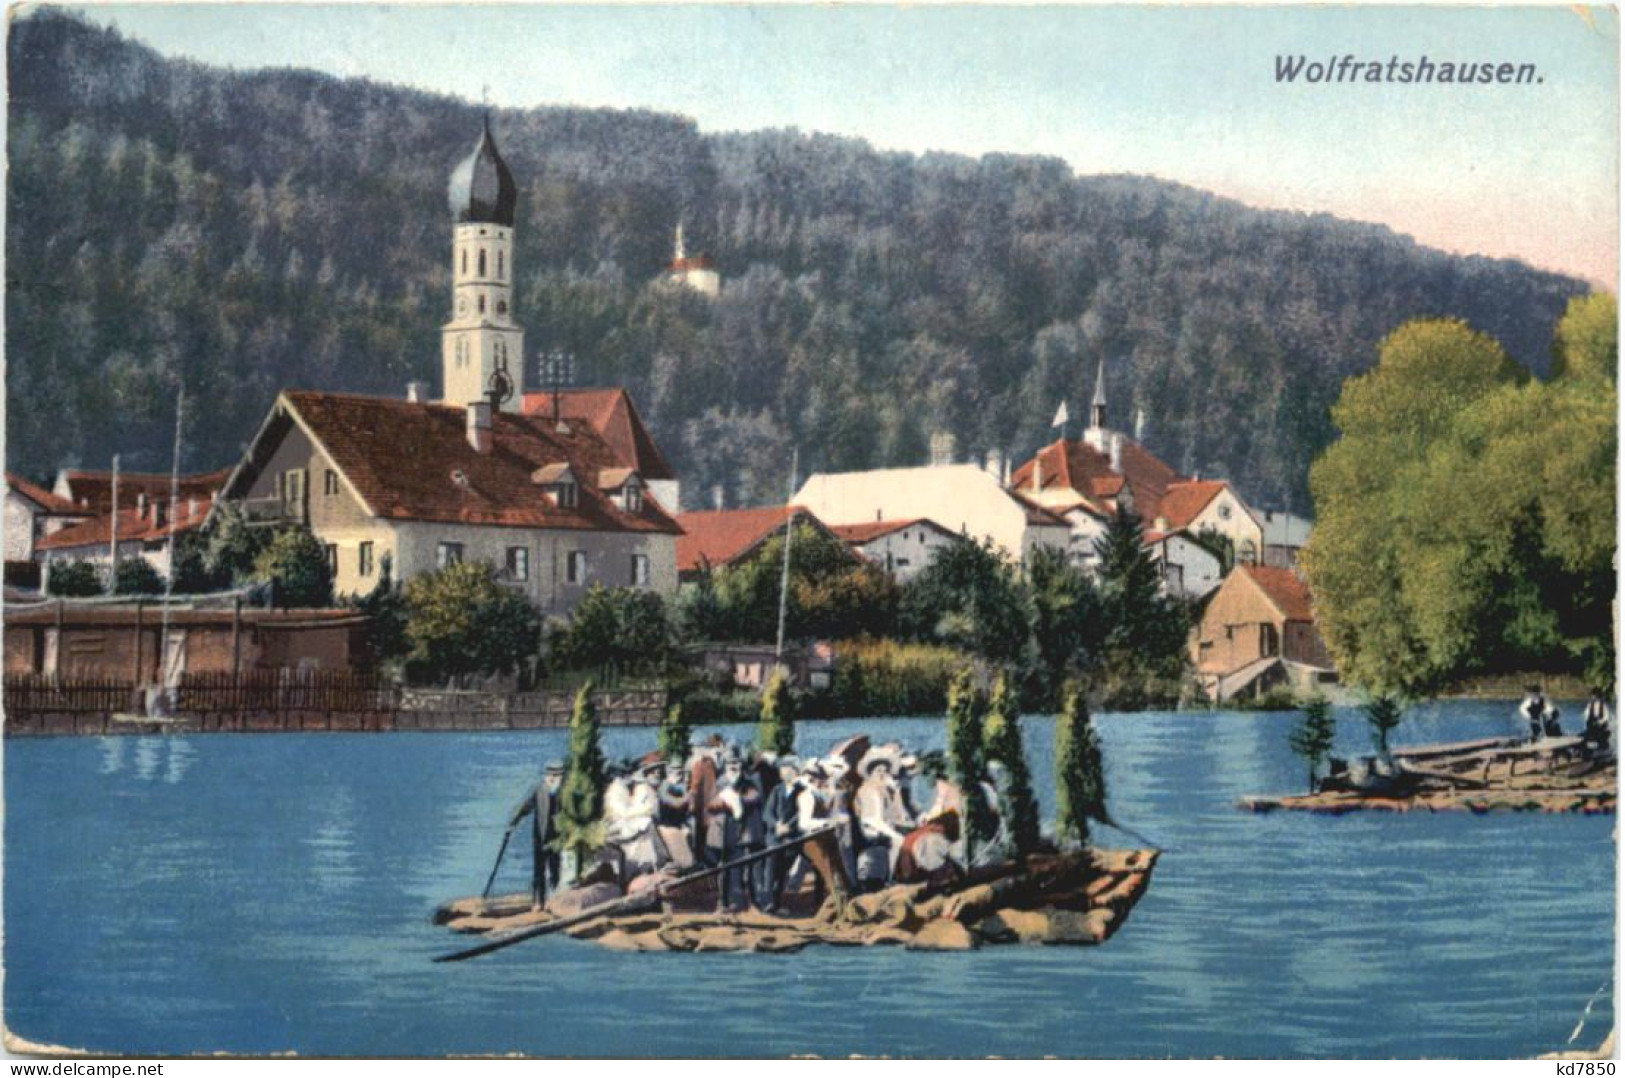 Wolfratshausen - Floss - Bad Tölz